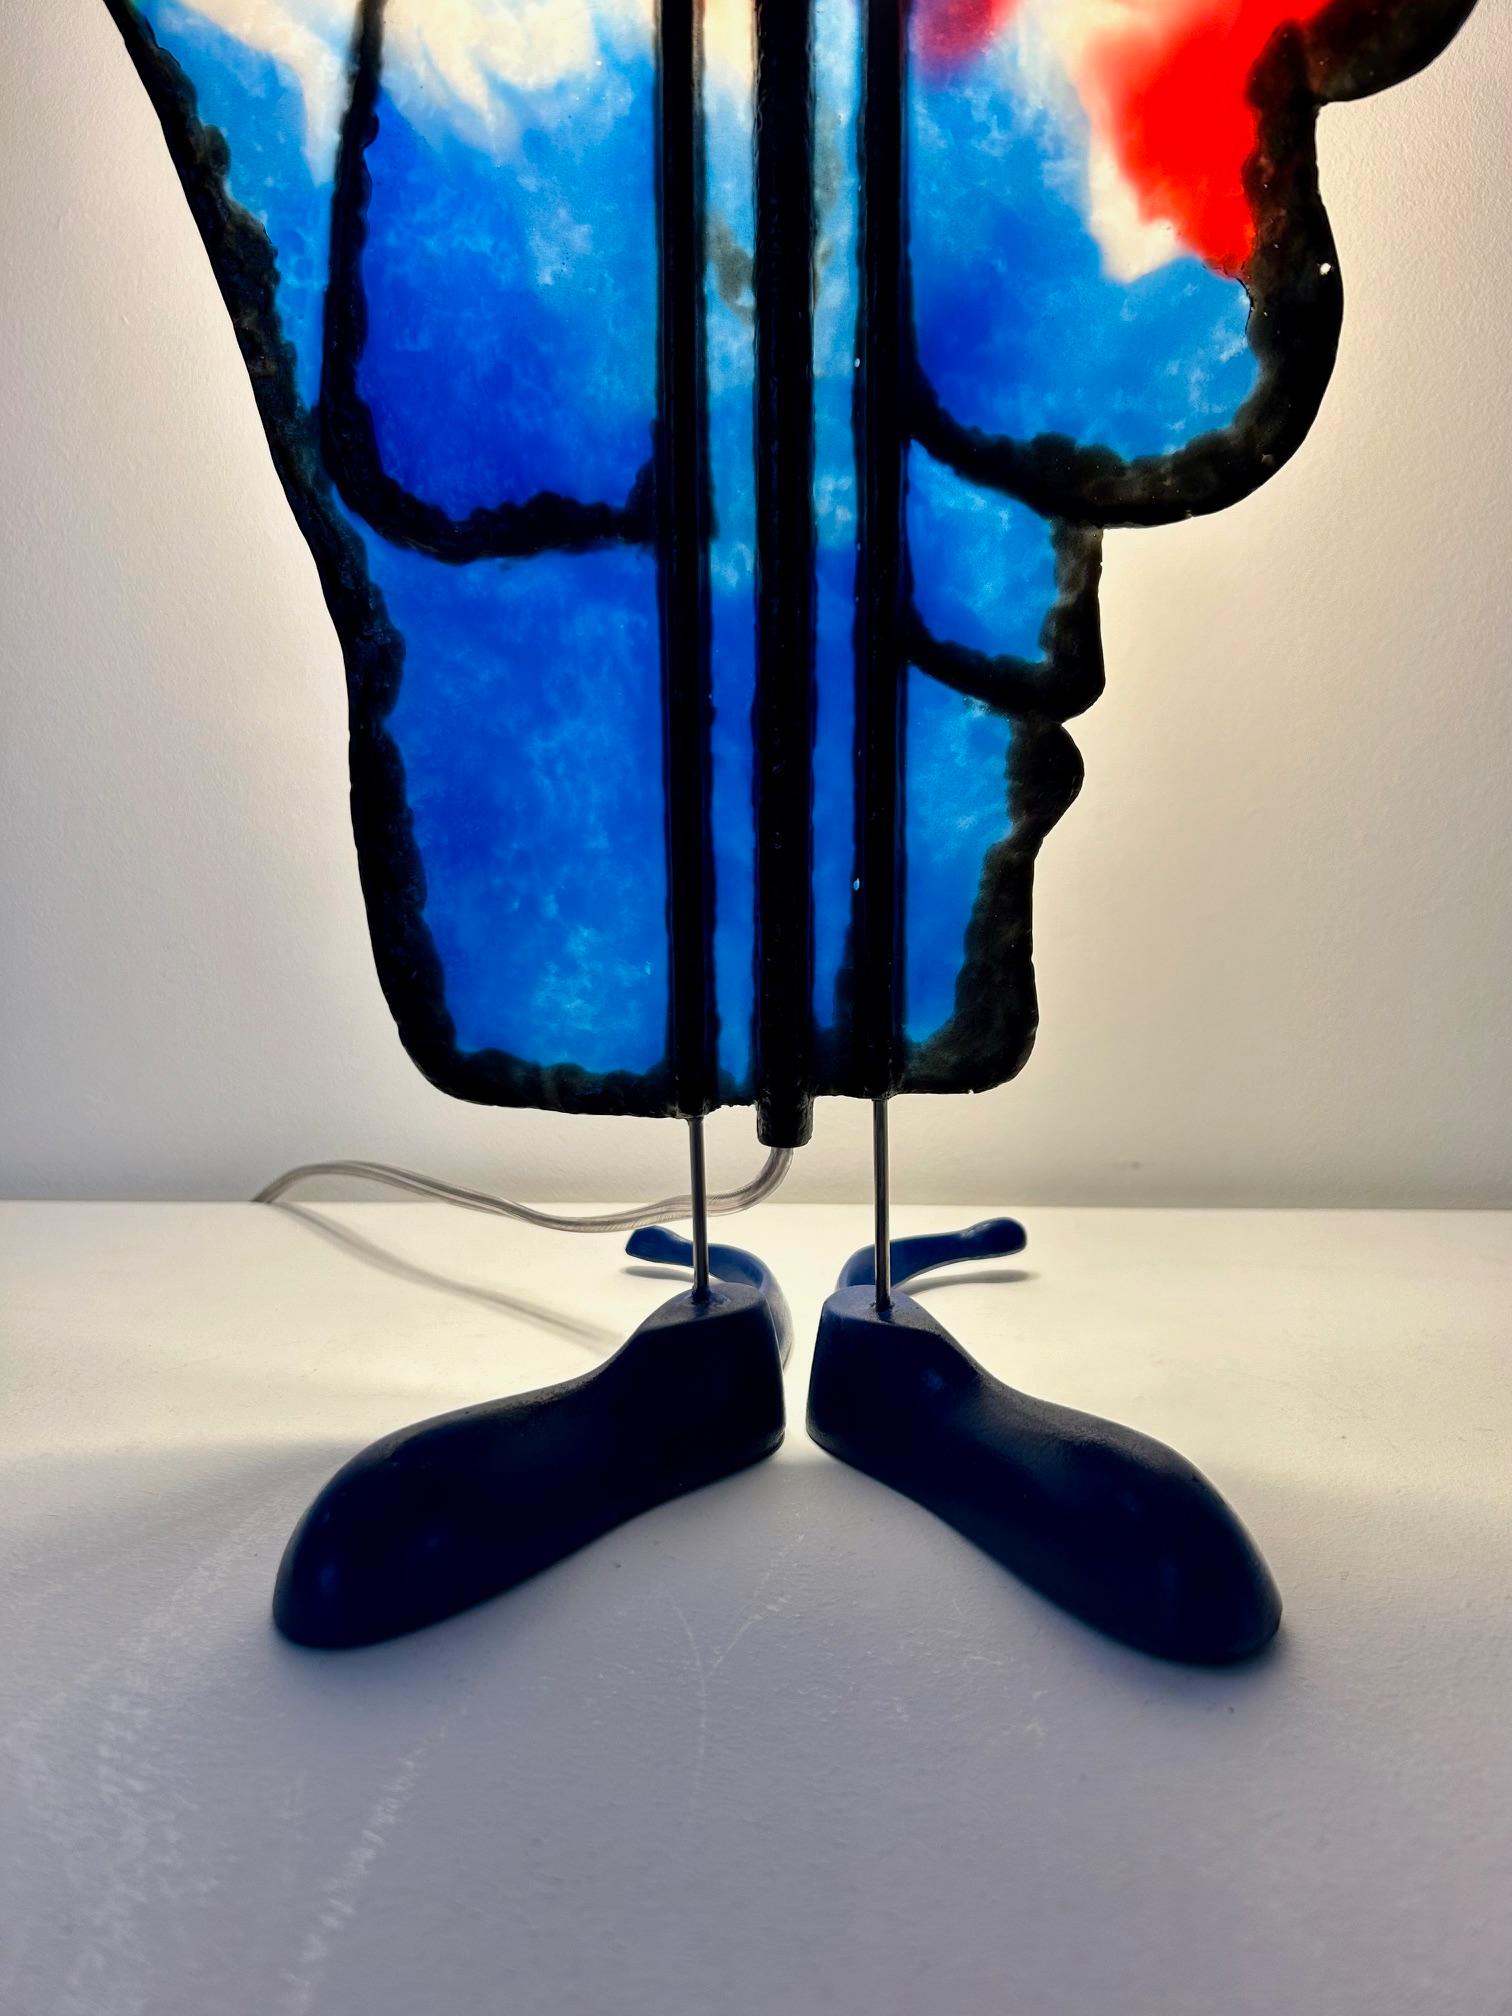 Resin Friend lamp by Gaetano Pesce for Meritalia, 1995